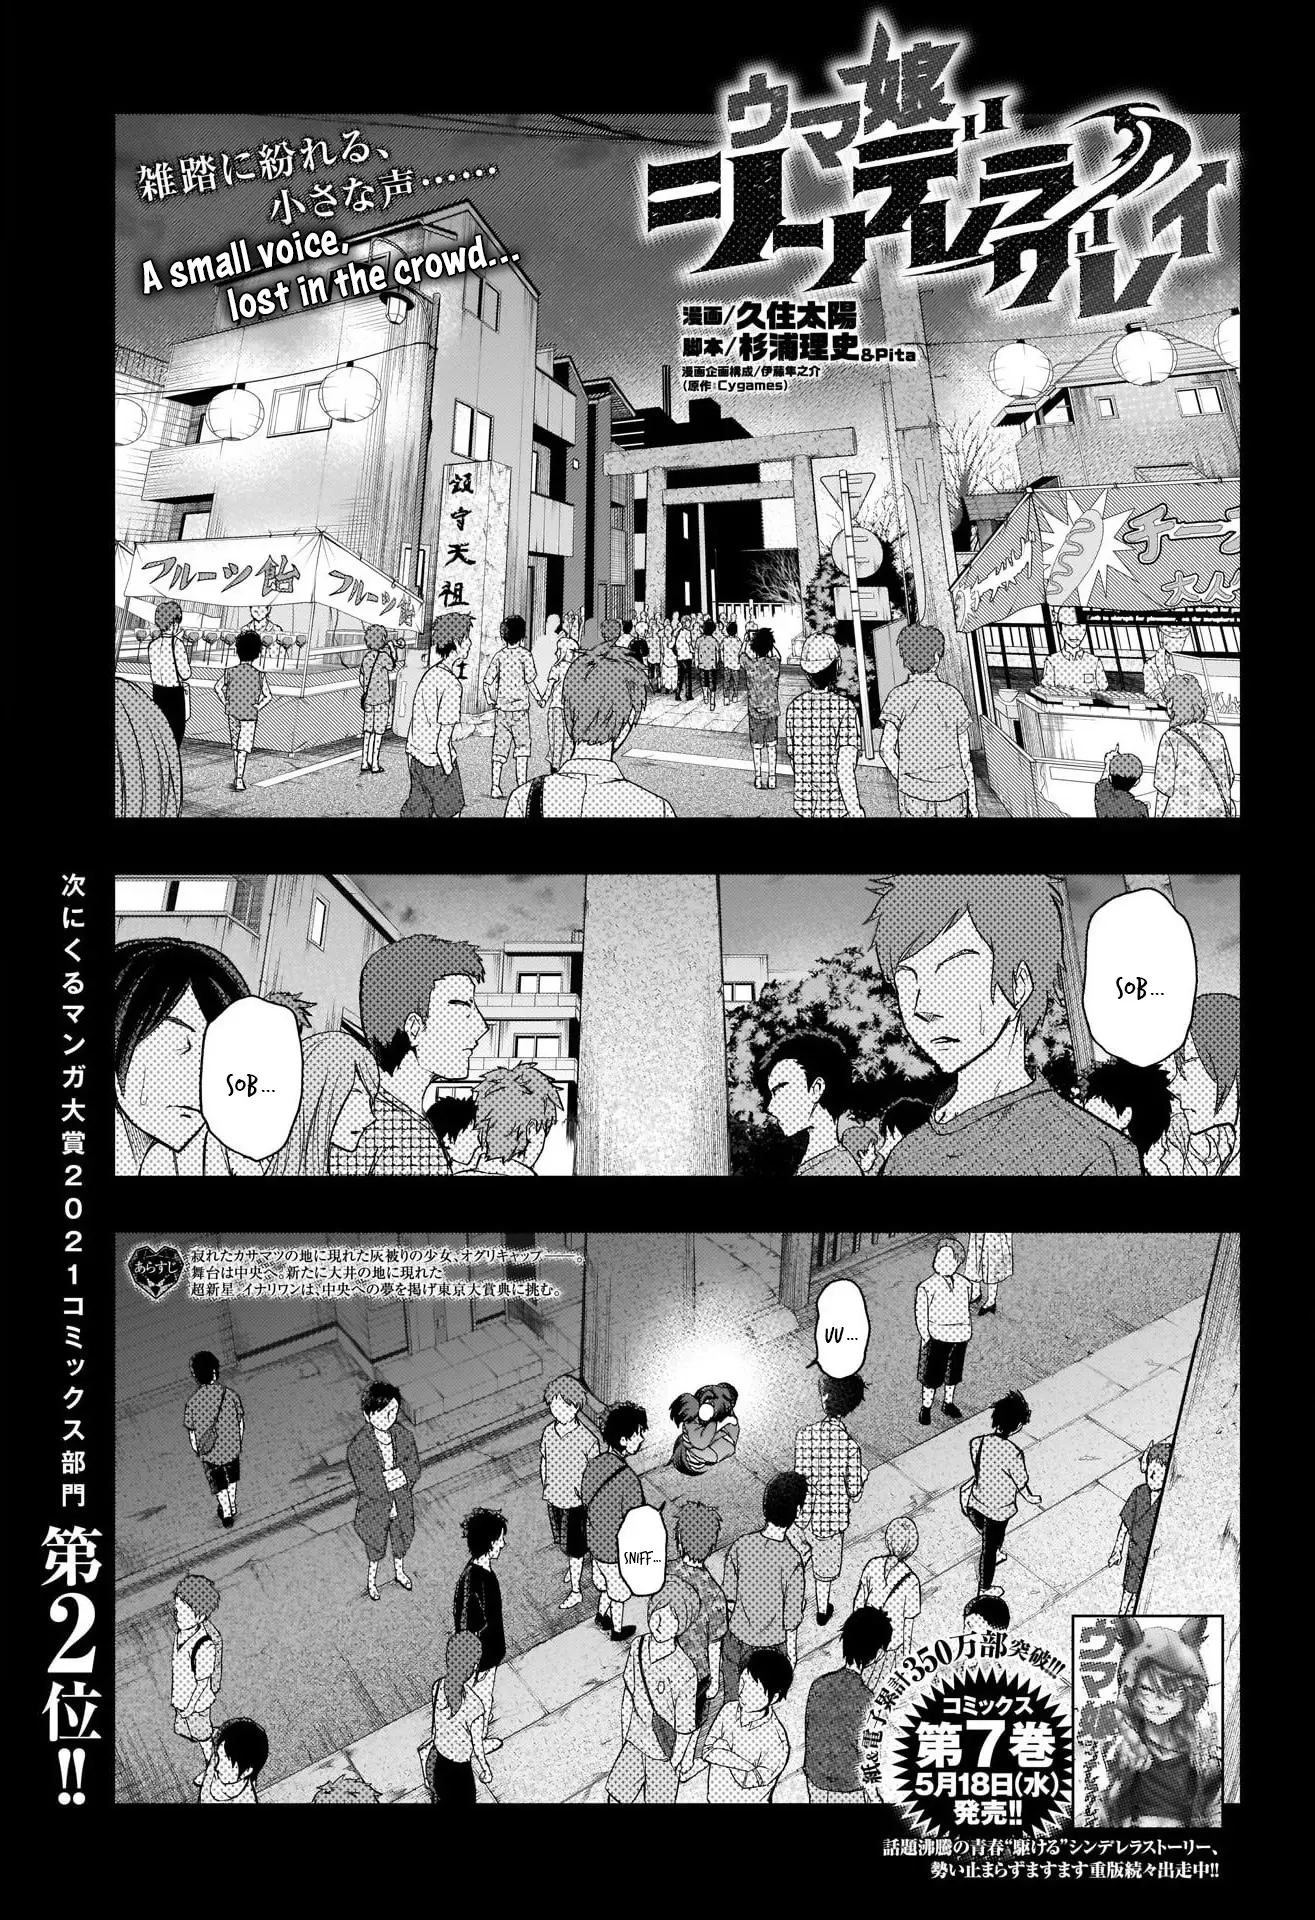 Uma Musume: Cinderella Gray - 78 page 1-81ac70cf